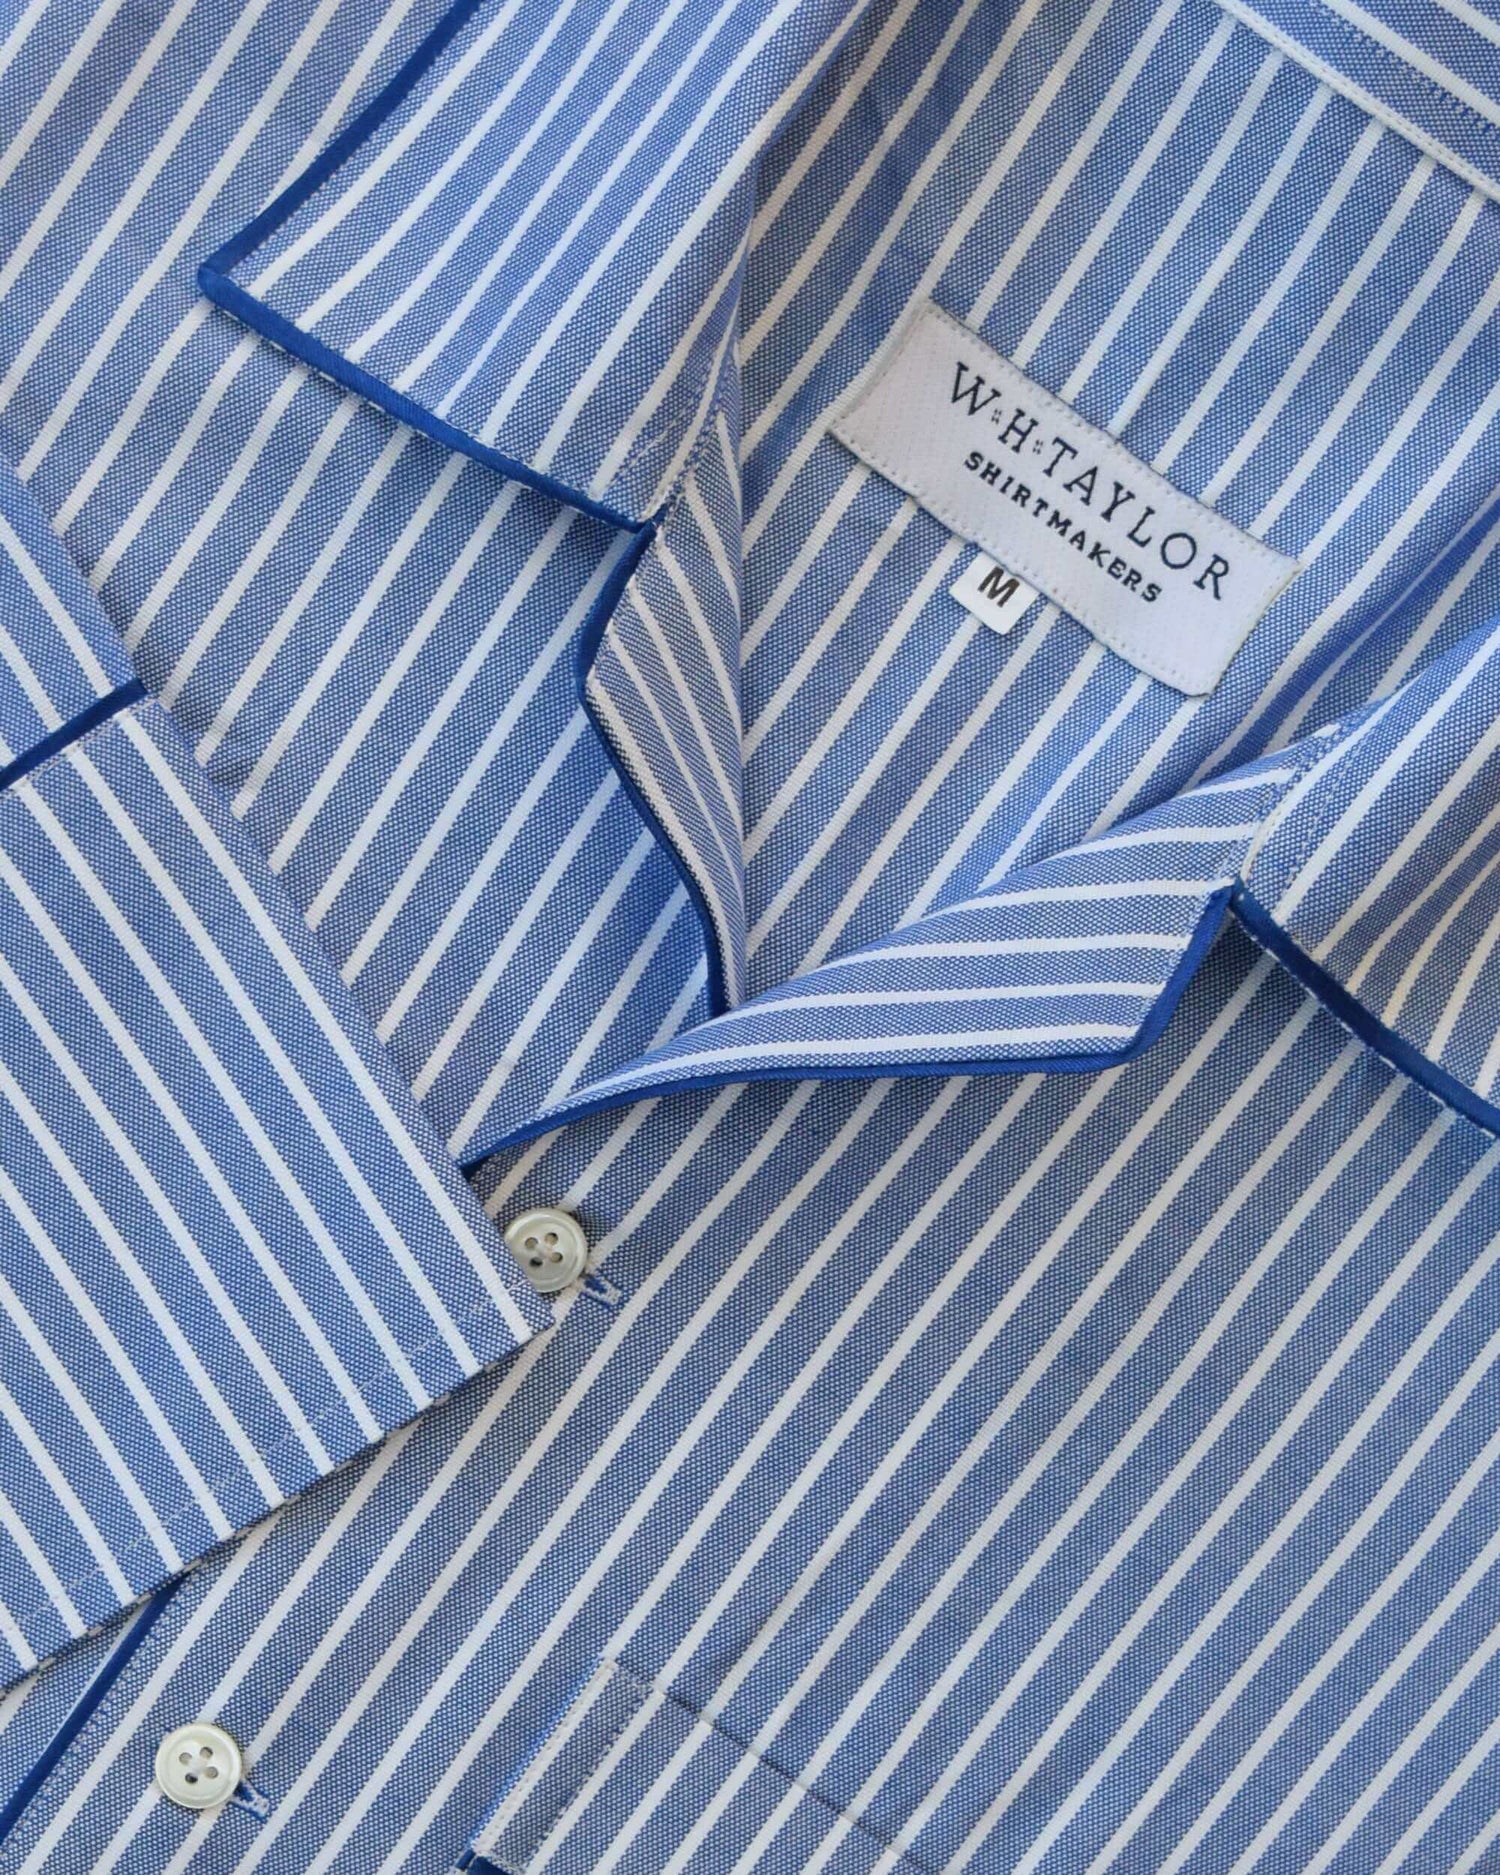 Blue & White Striped 100% Cotton Luxury Pyjamas - whtshirtmakers.com